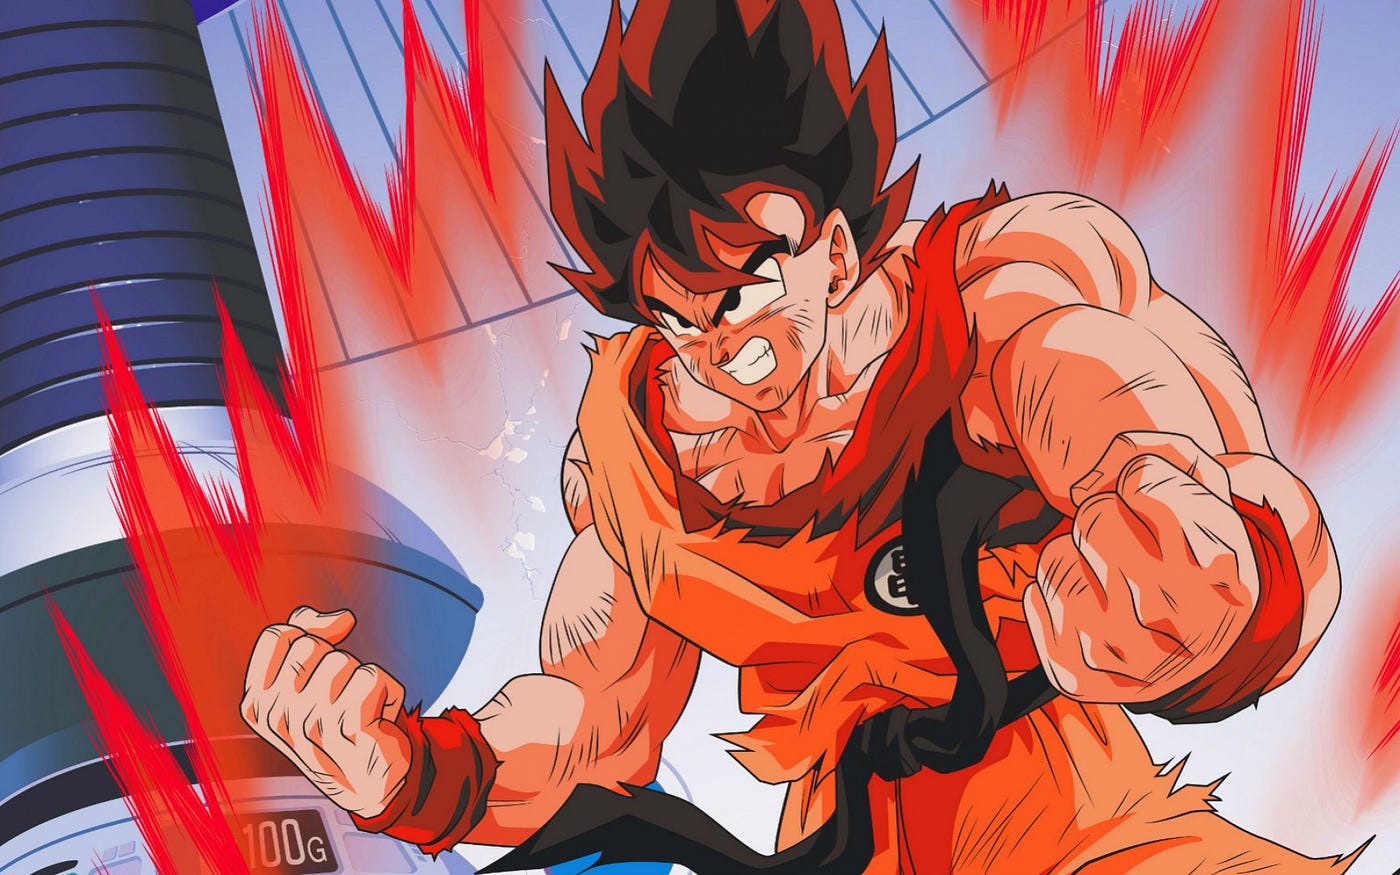 Why Goku Is My Greatest Inspiration, by Chrissie